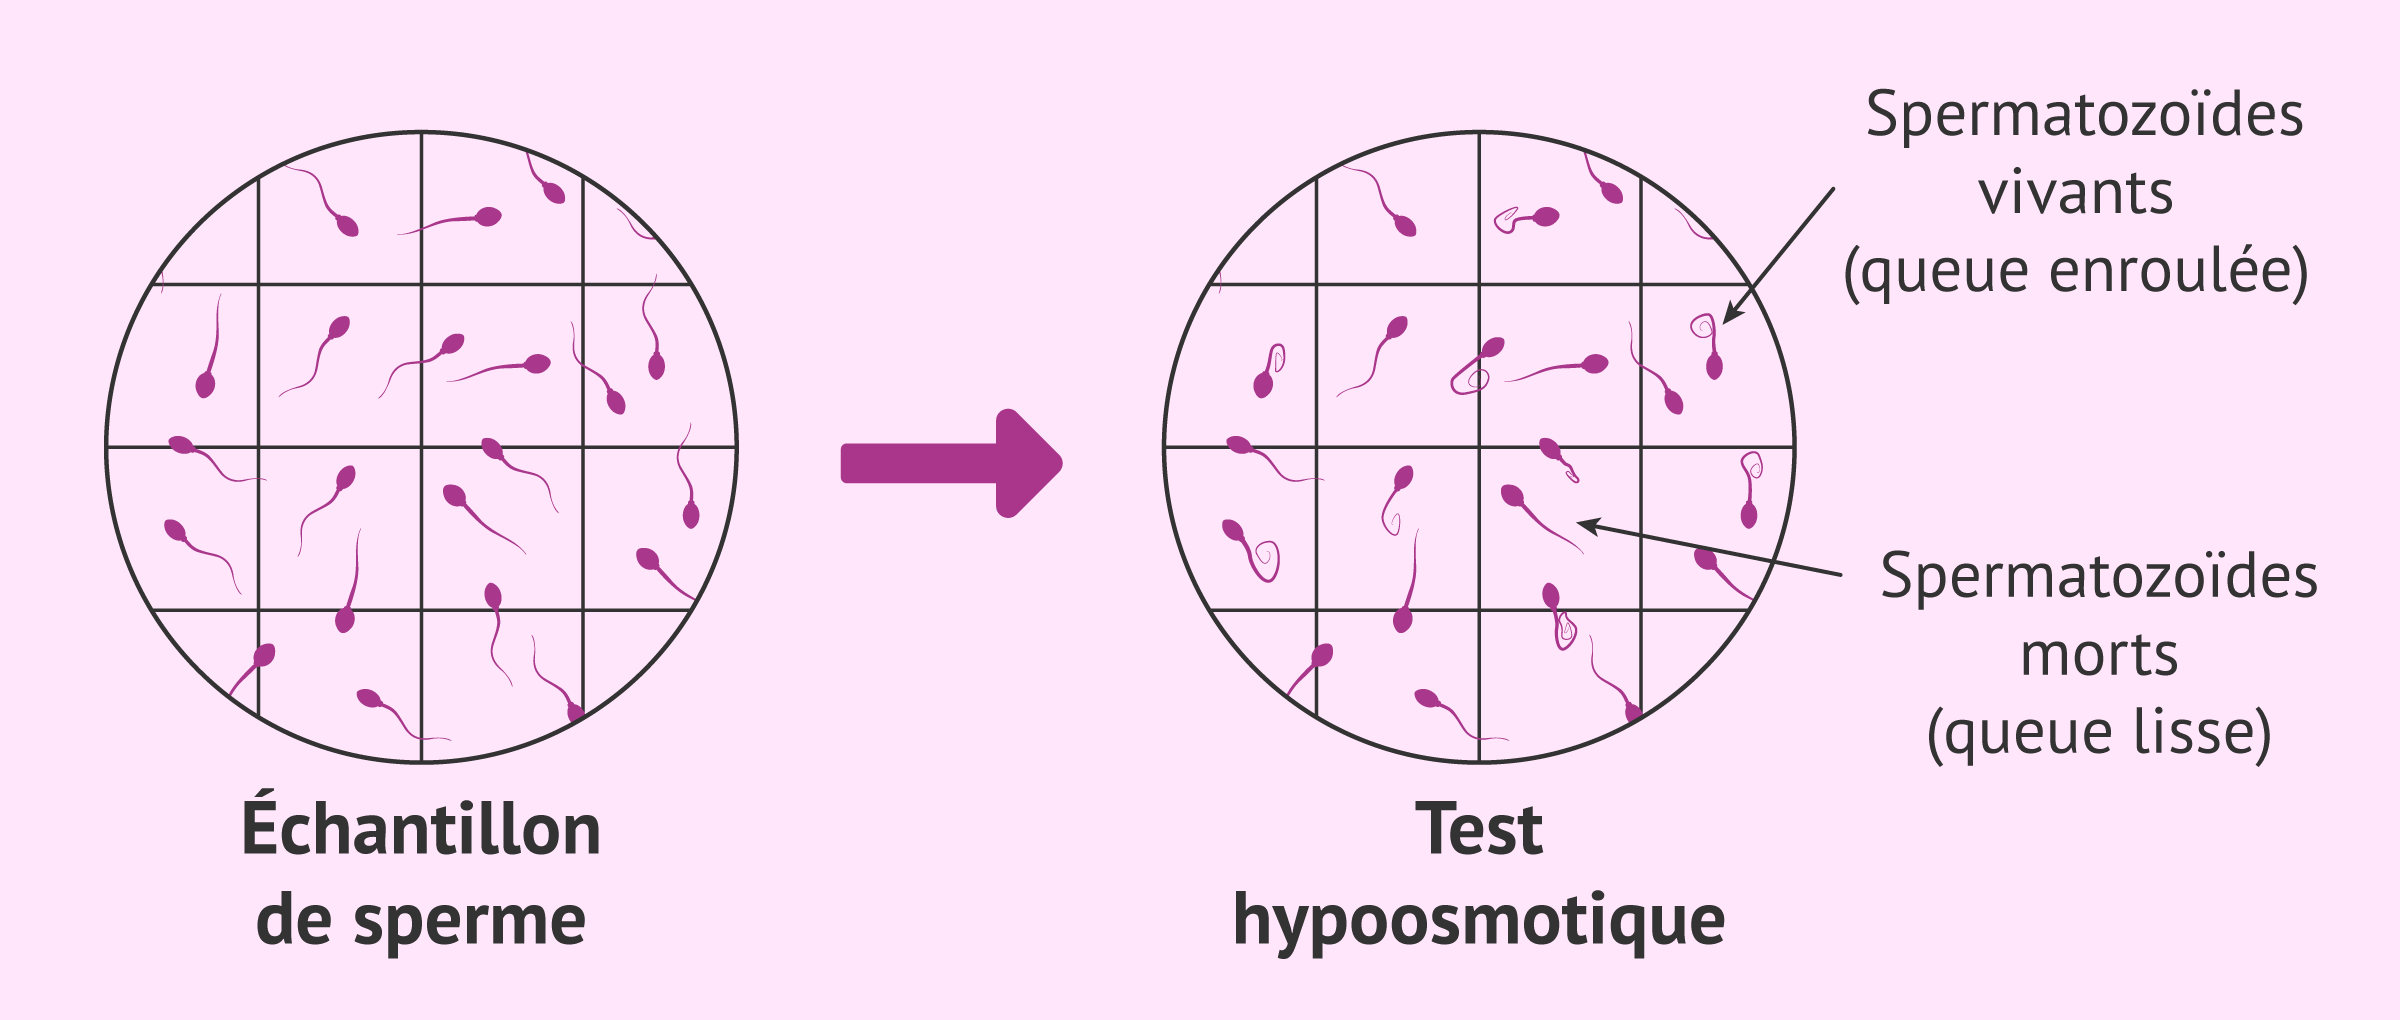 Teste hipoosmótico para diagnóstico de necrospermia